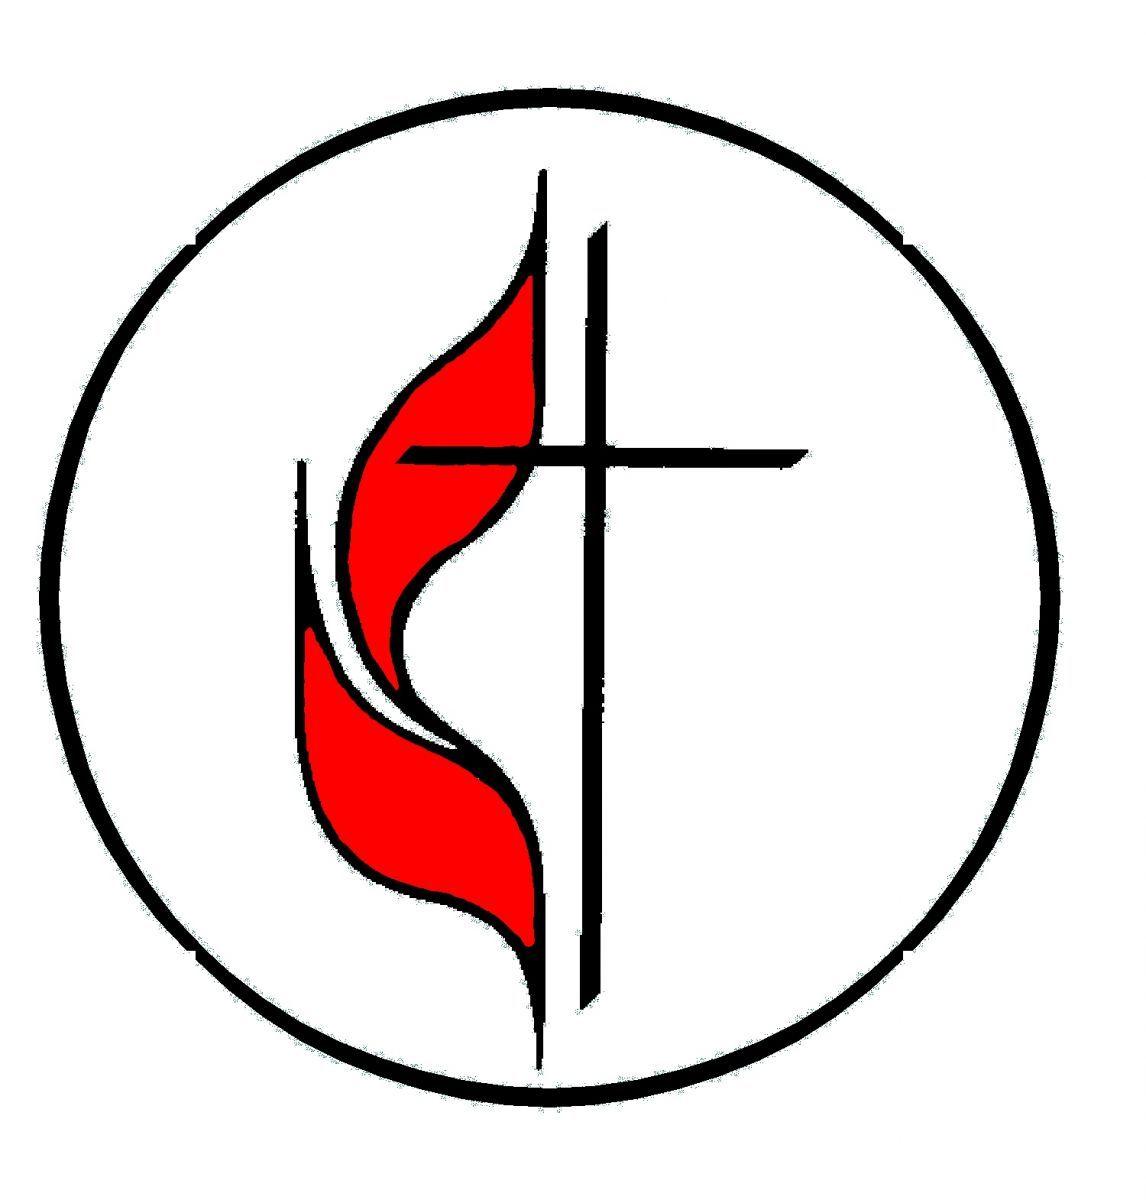 UMC Logo - United methodist church Logos